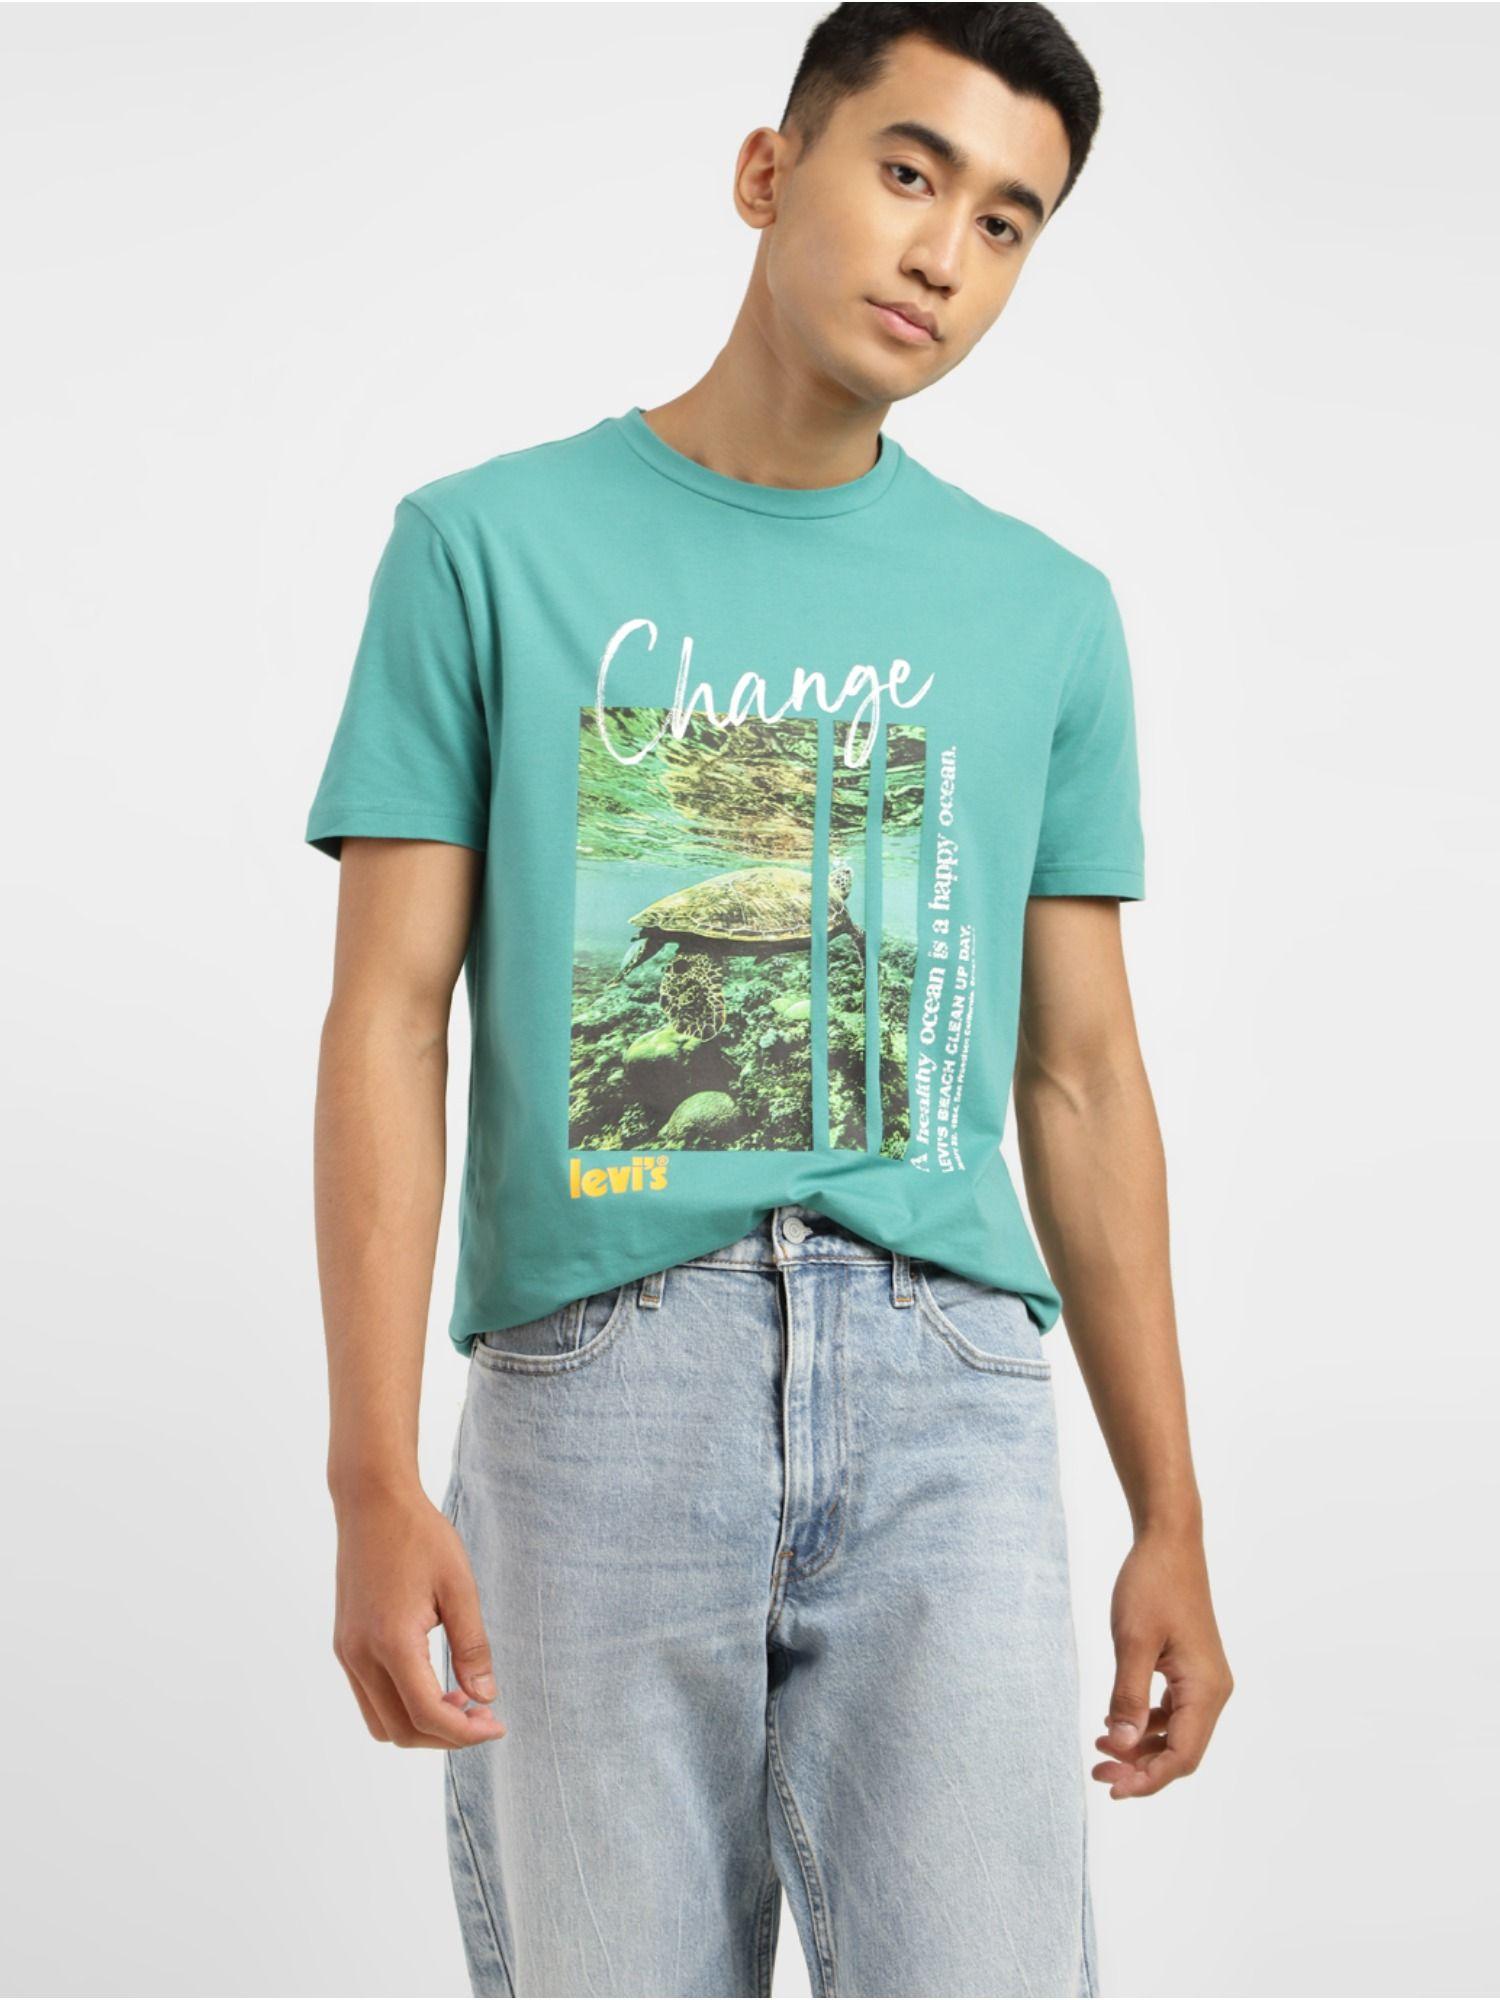 men's turquoise graphic printed crew neck t-shirt